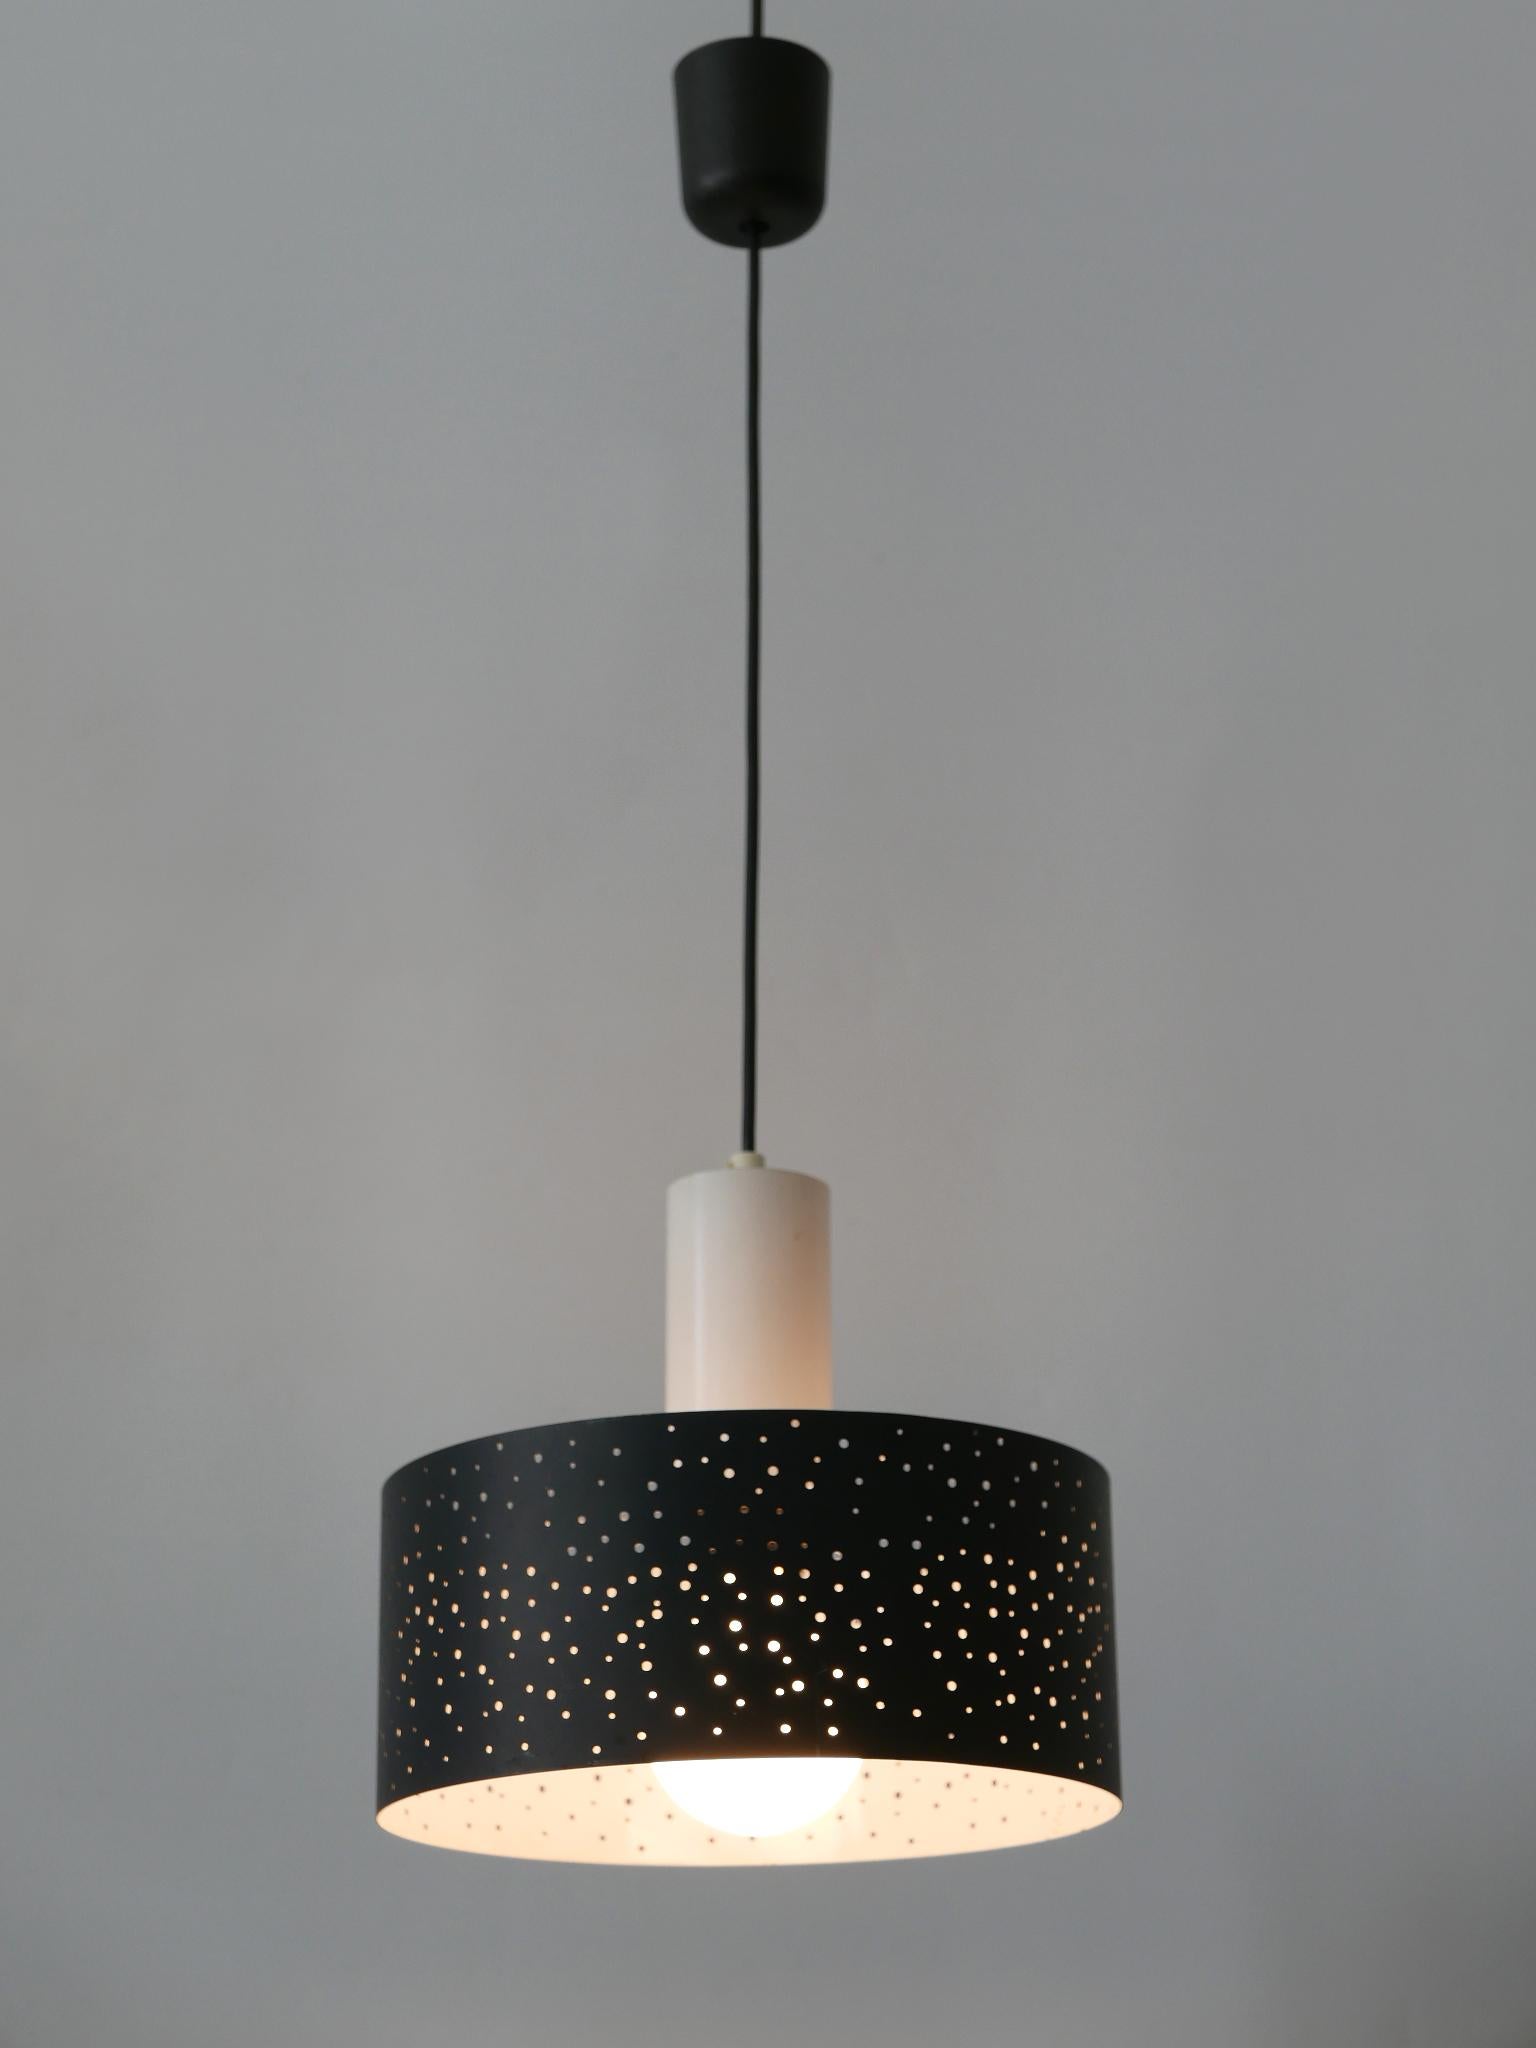 Elegant Mid-Century Modern Pendant Lamp by Ernest Igl for Hillebrand 1960s For Sale 7